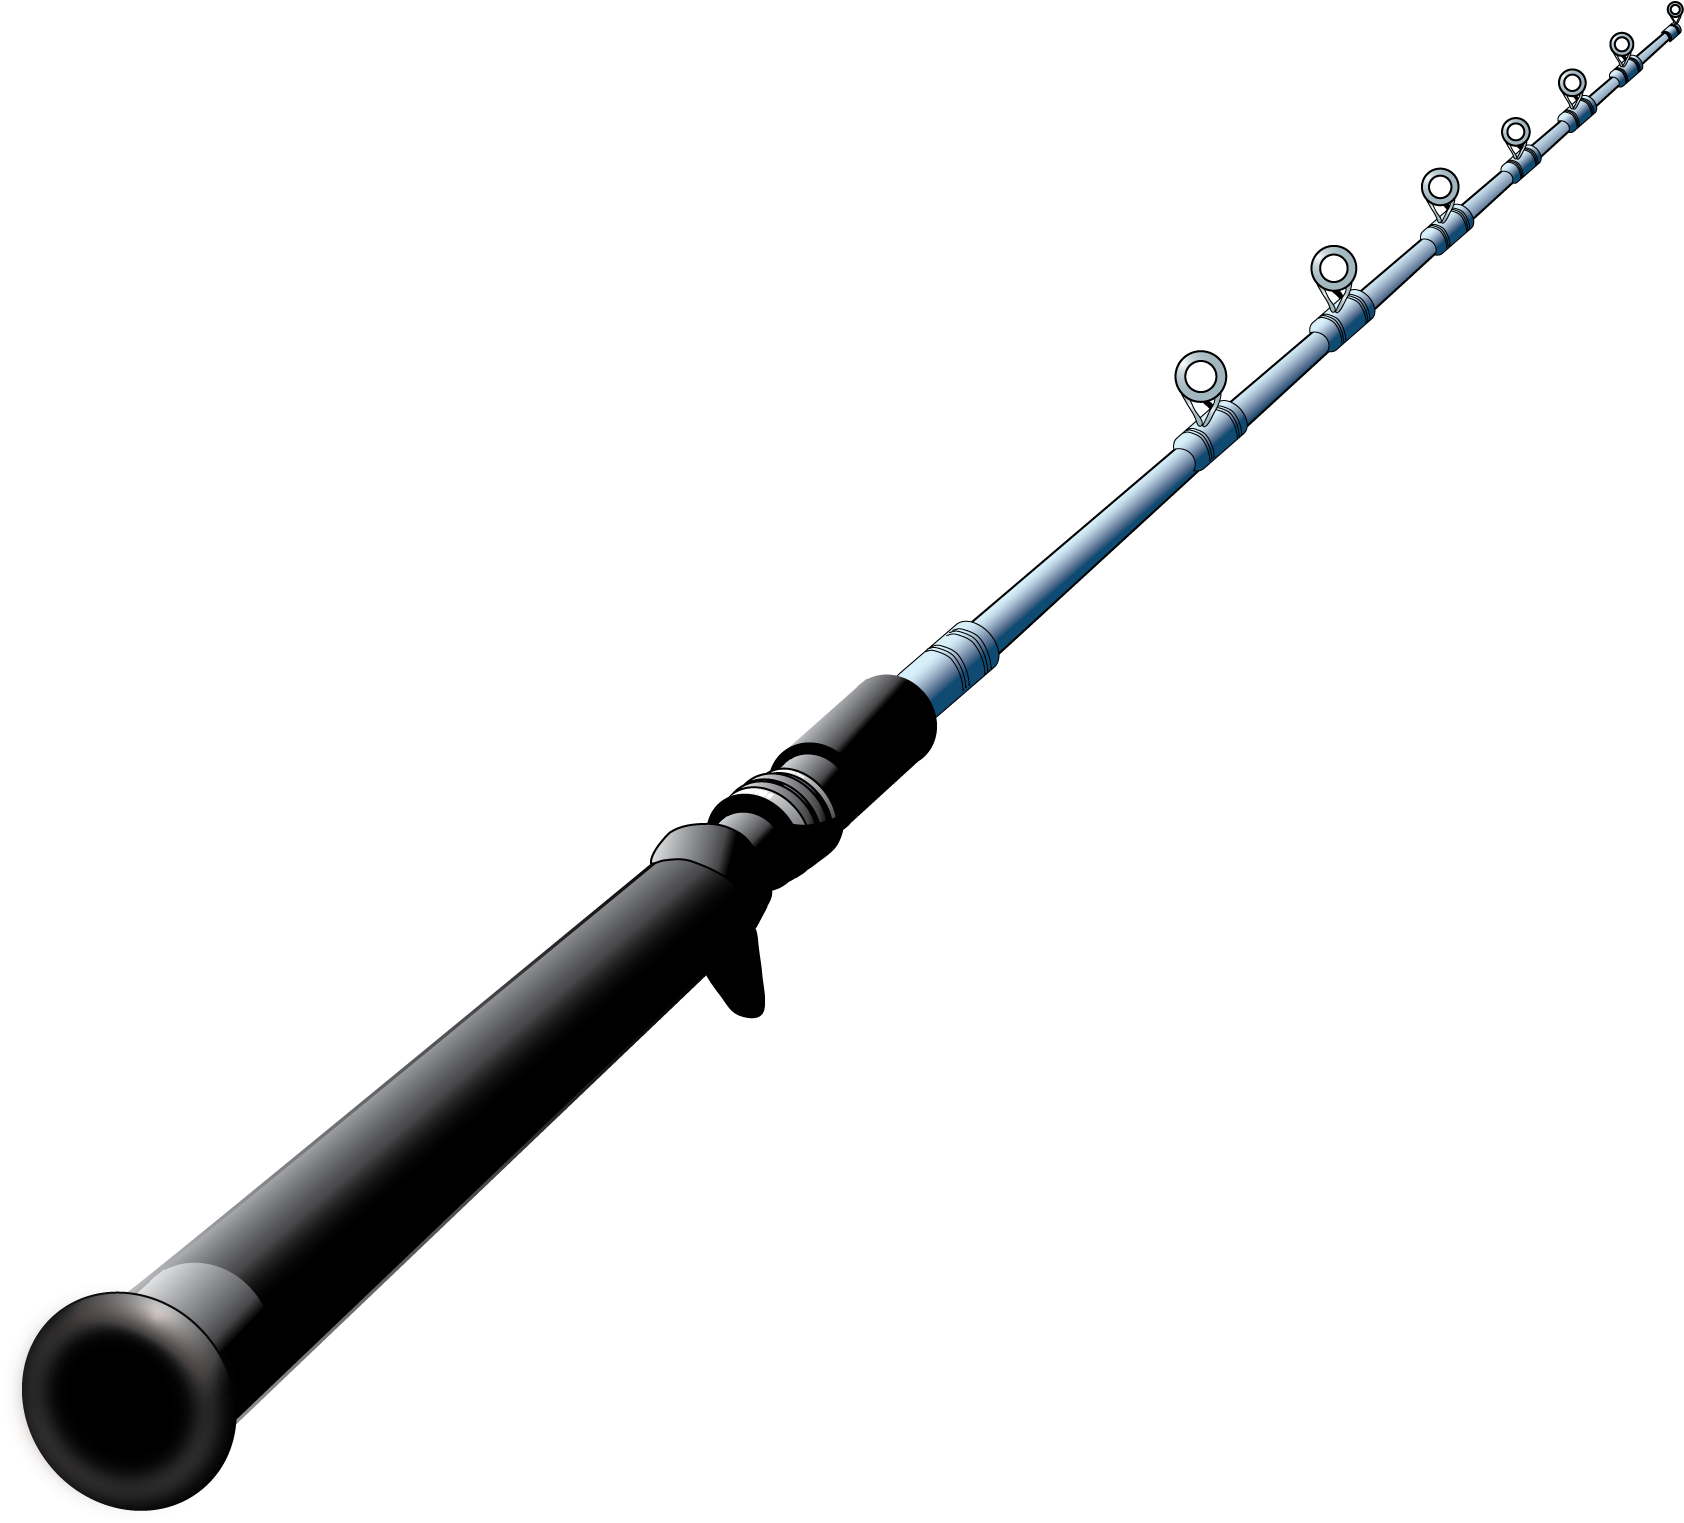 Baitcasting Rod - 16 Inch Asp Baton (1802x1642)